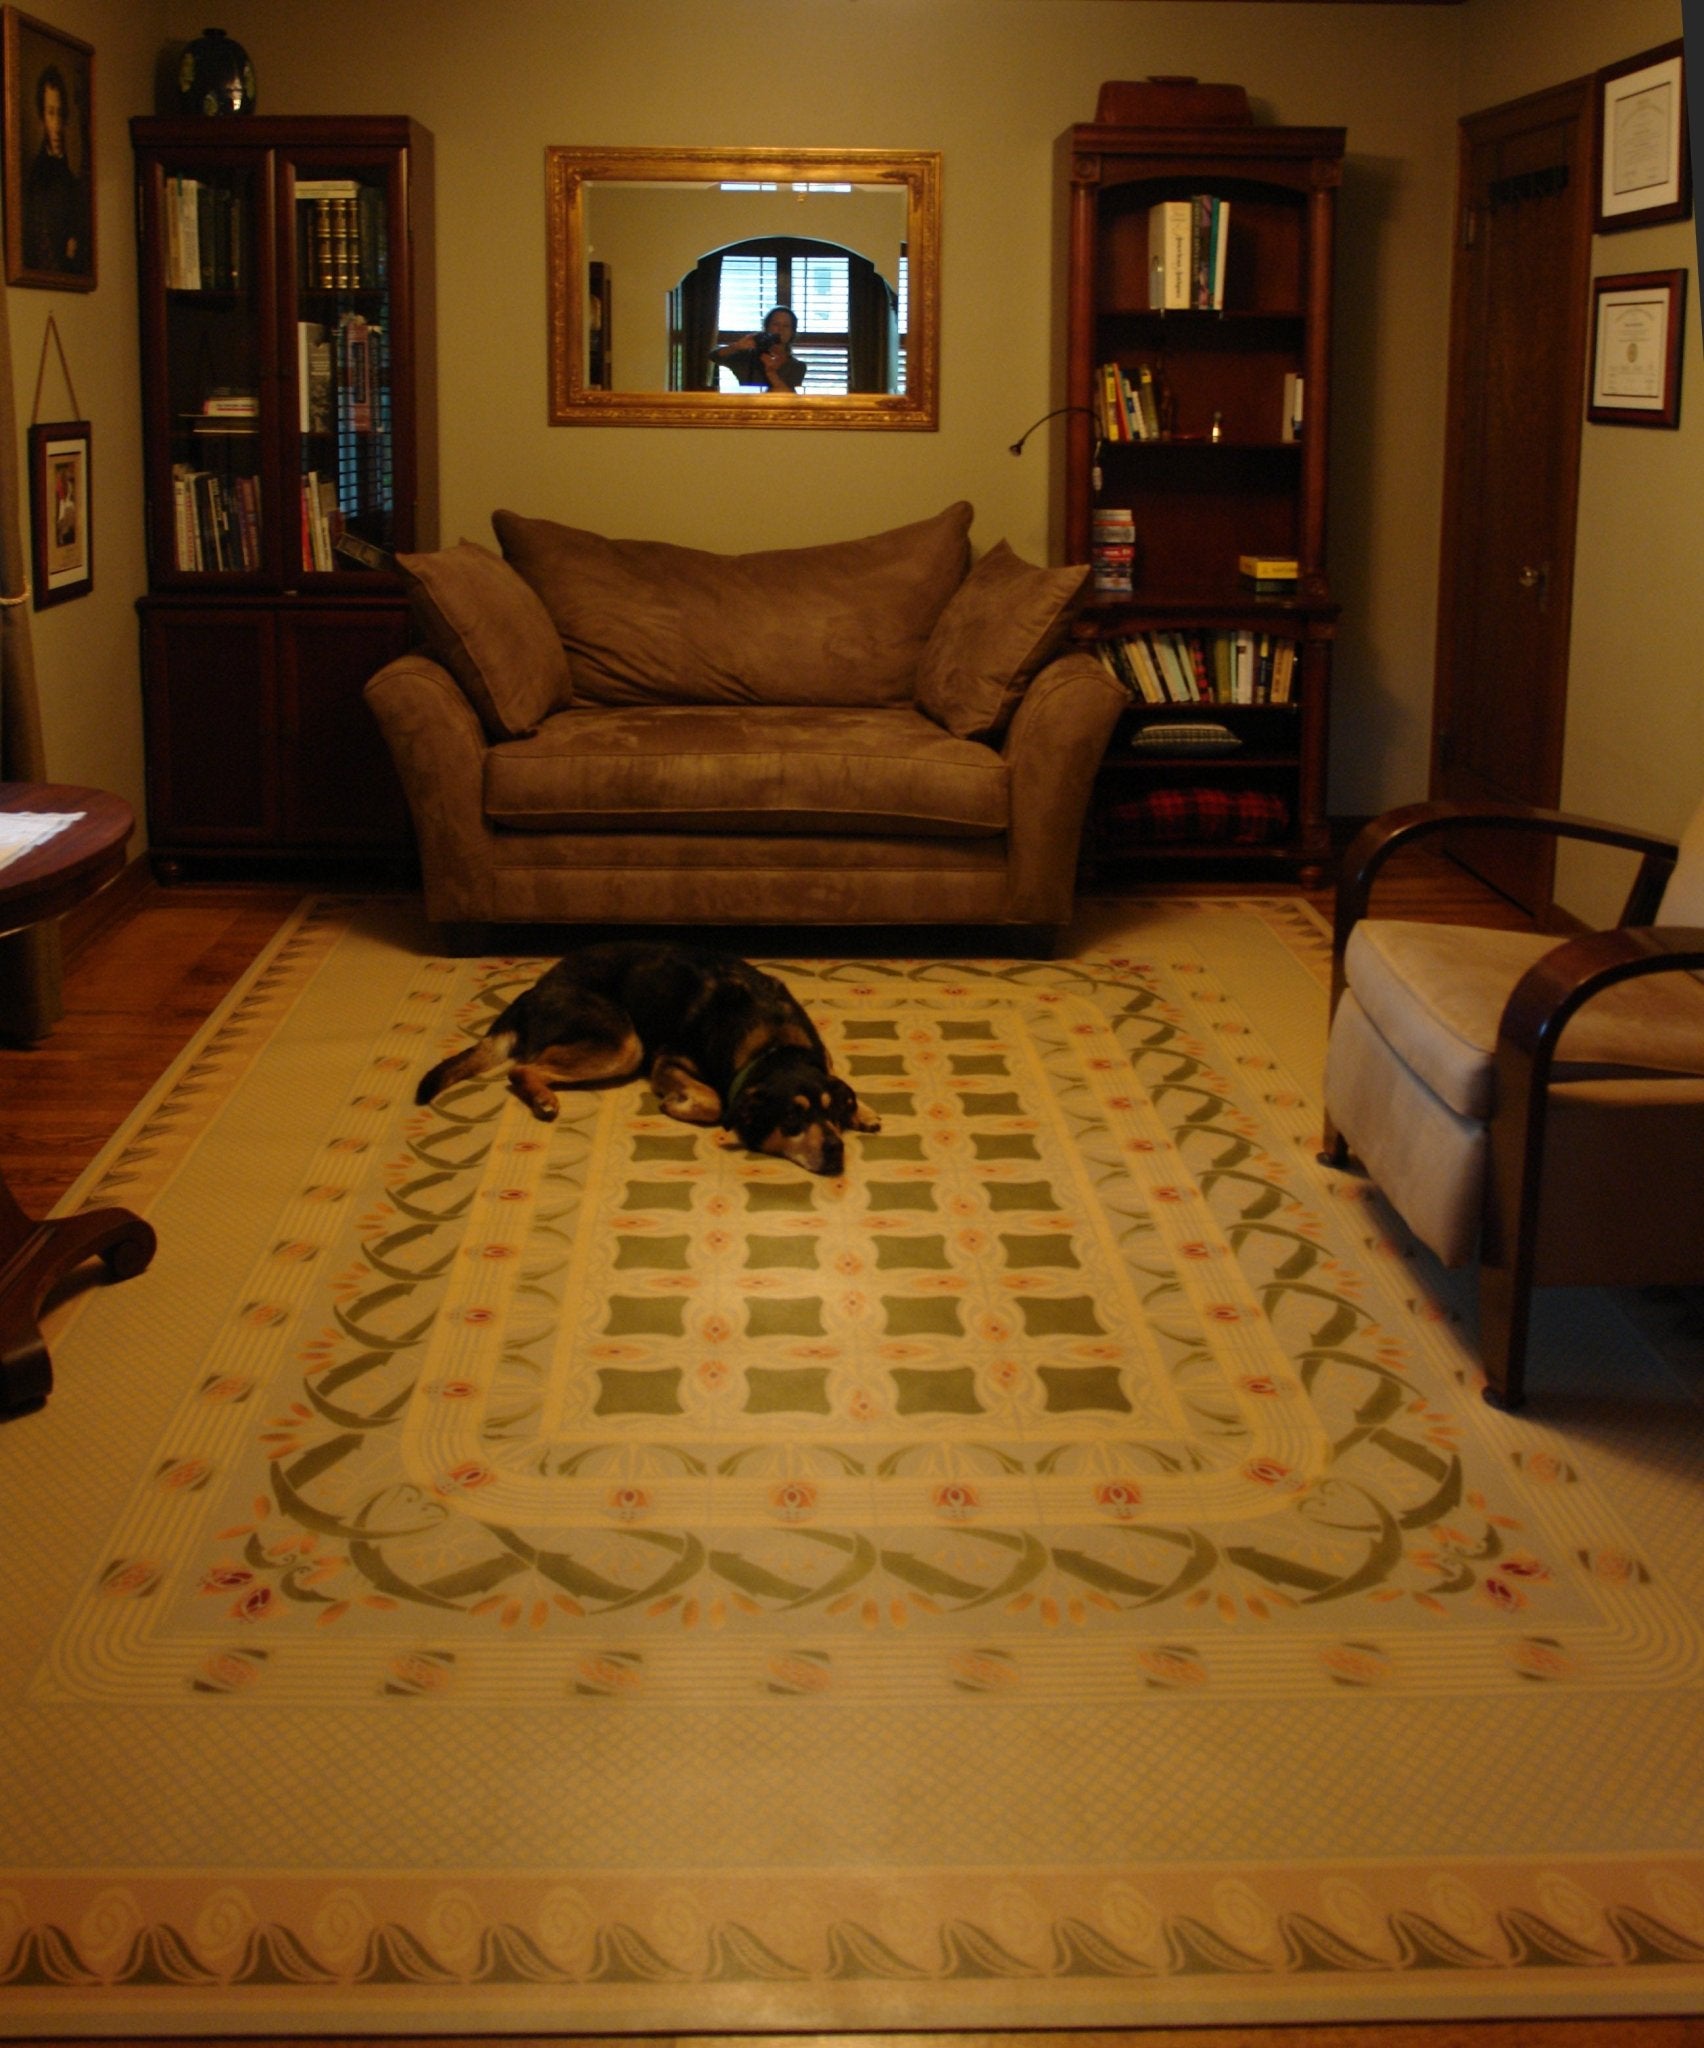 An in-situ image of Wunderlich Floorcloth #1.